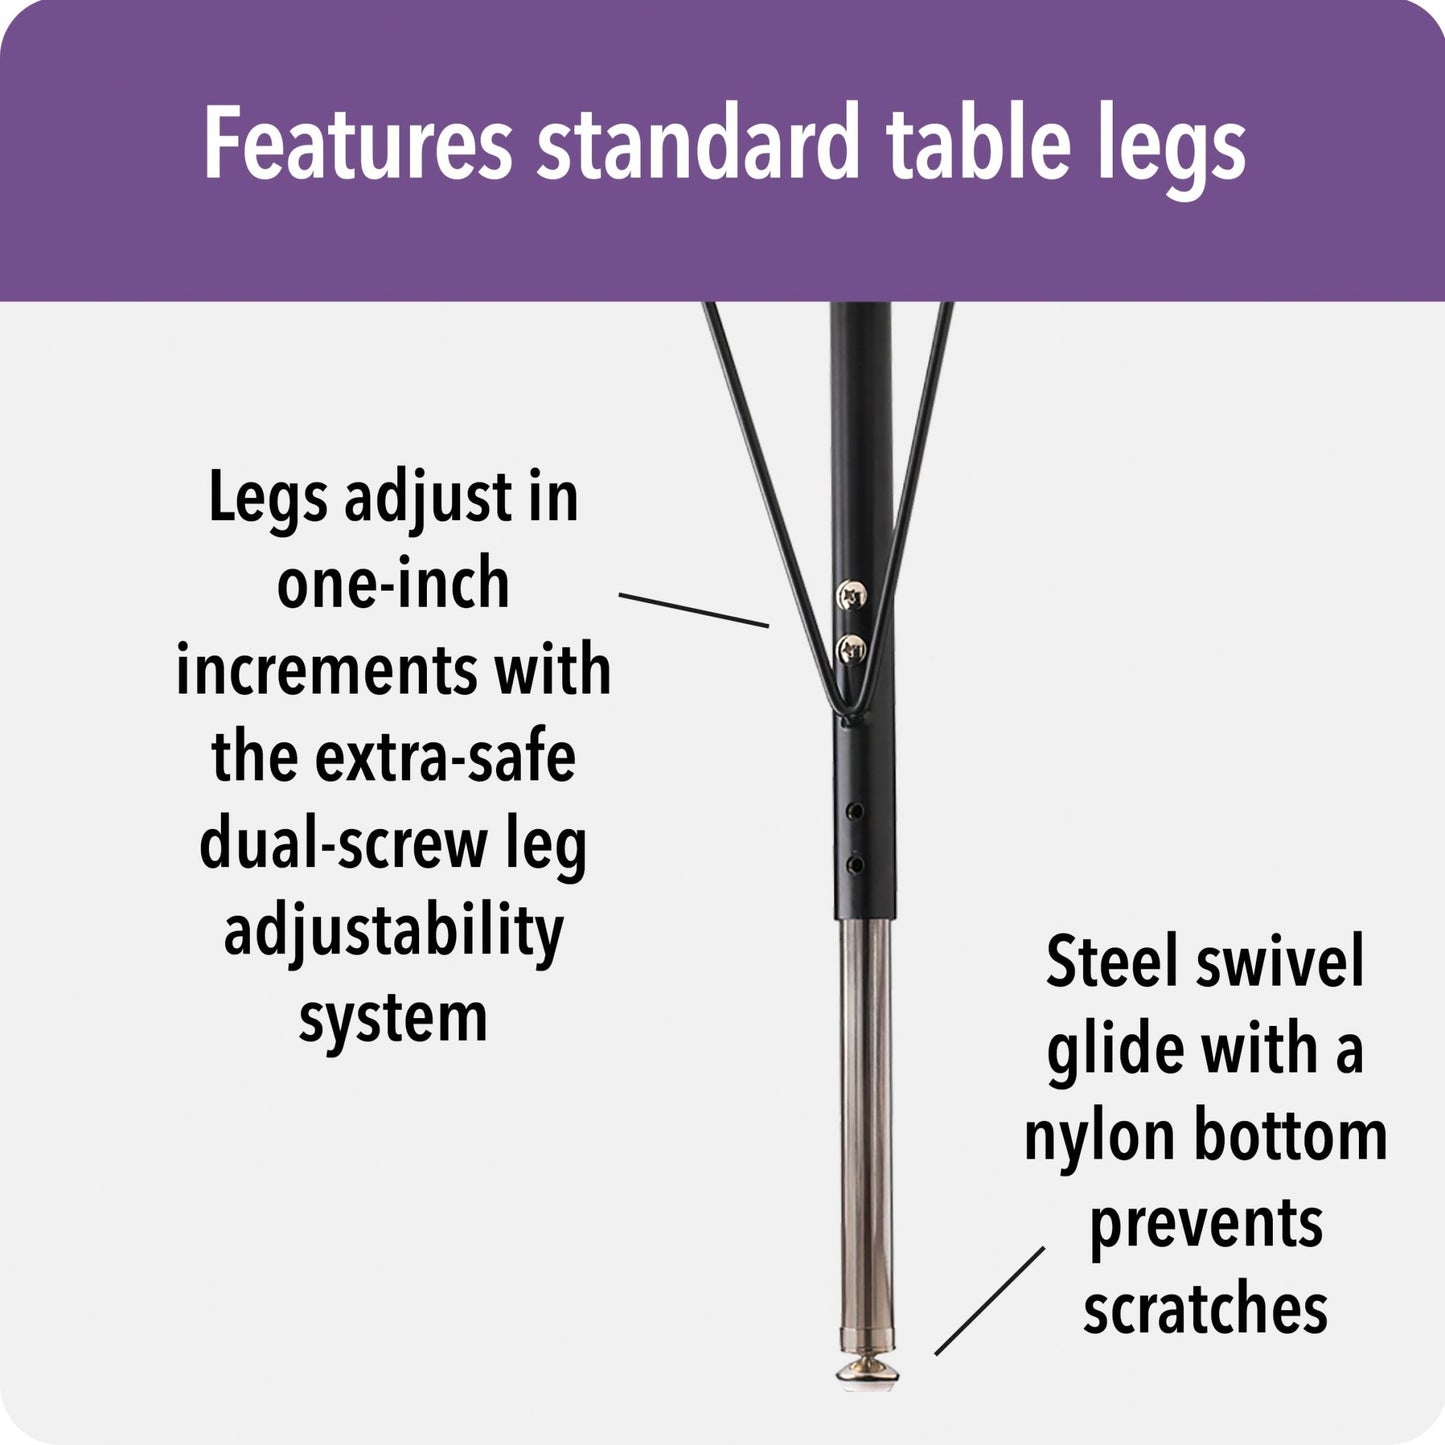 Jonti-Craft Kidney Elementary Activity Table with Heavy Duty Laminate Top - Height Adjustable Legs - SchoolOutlet